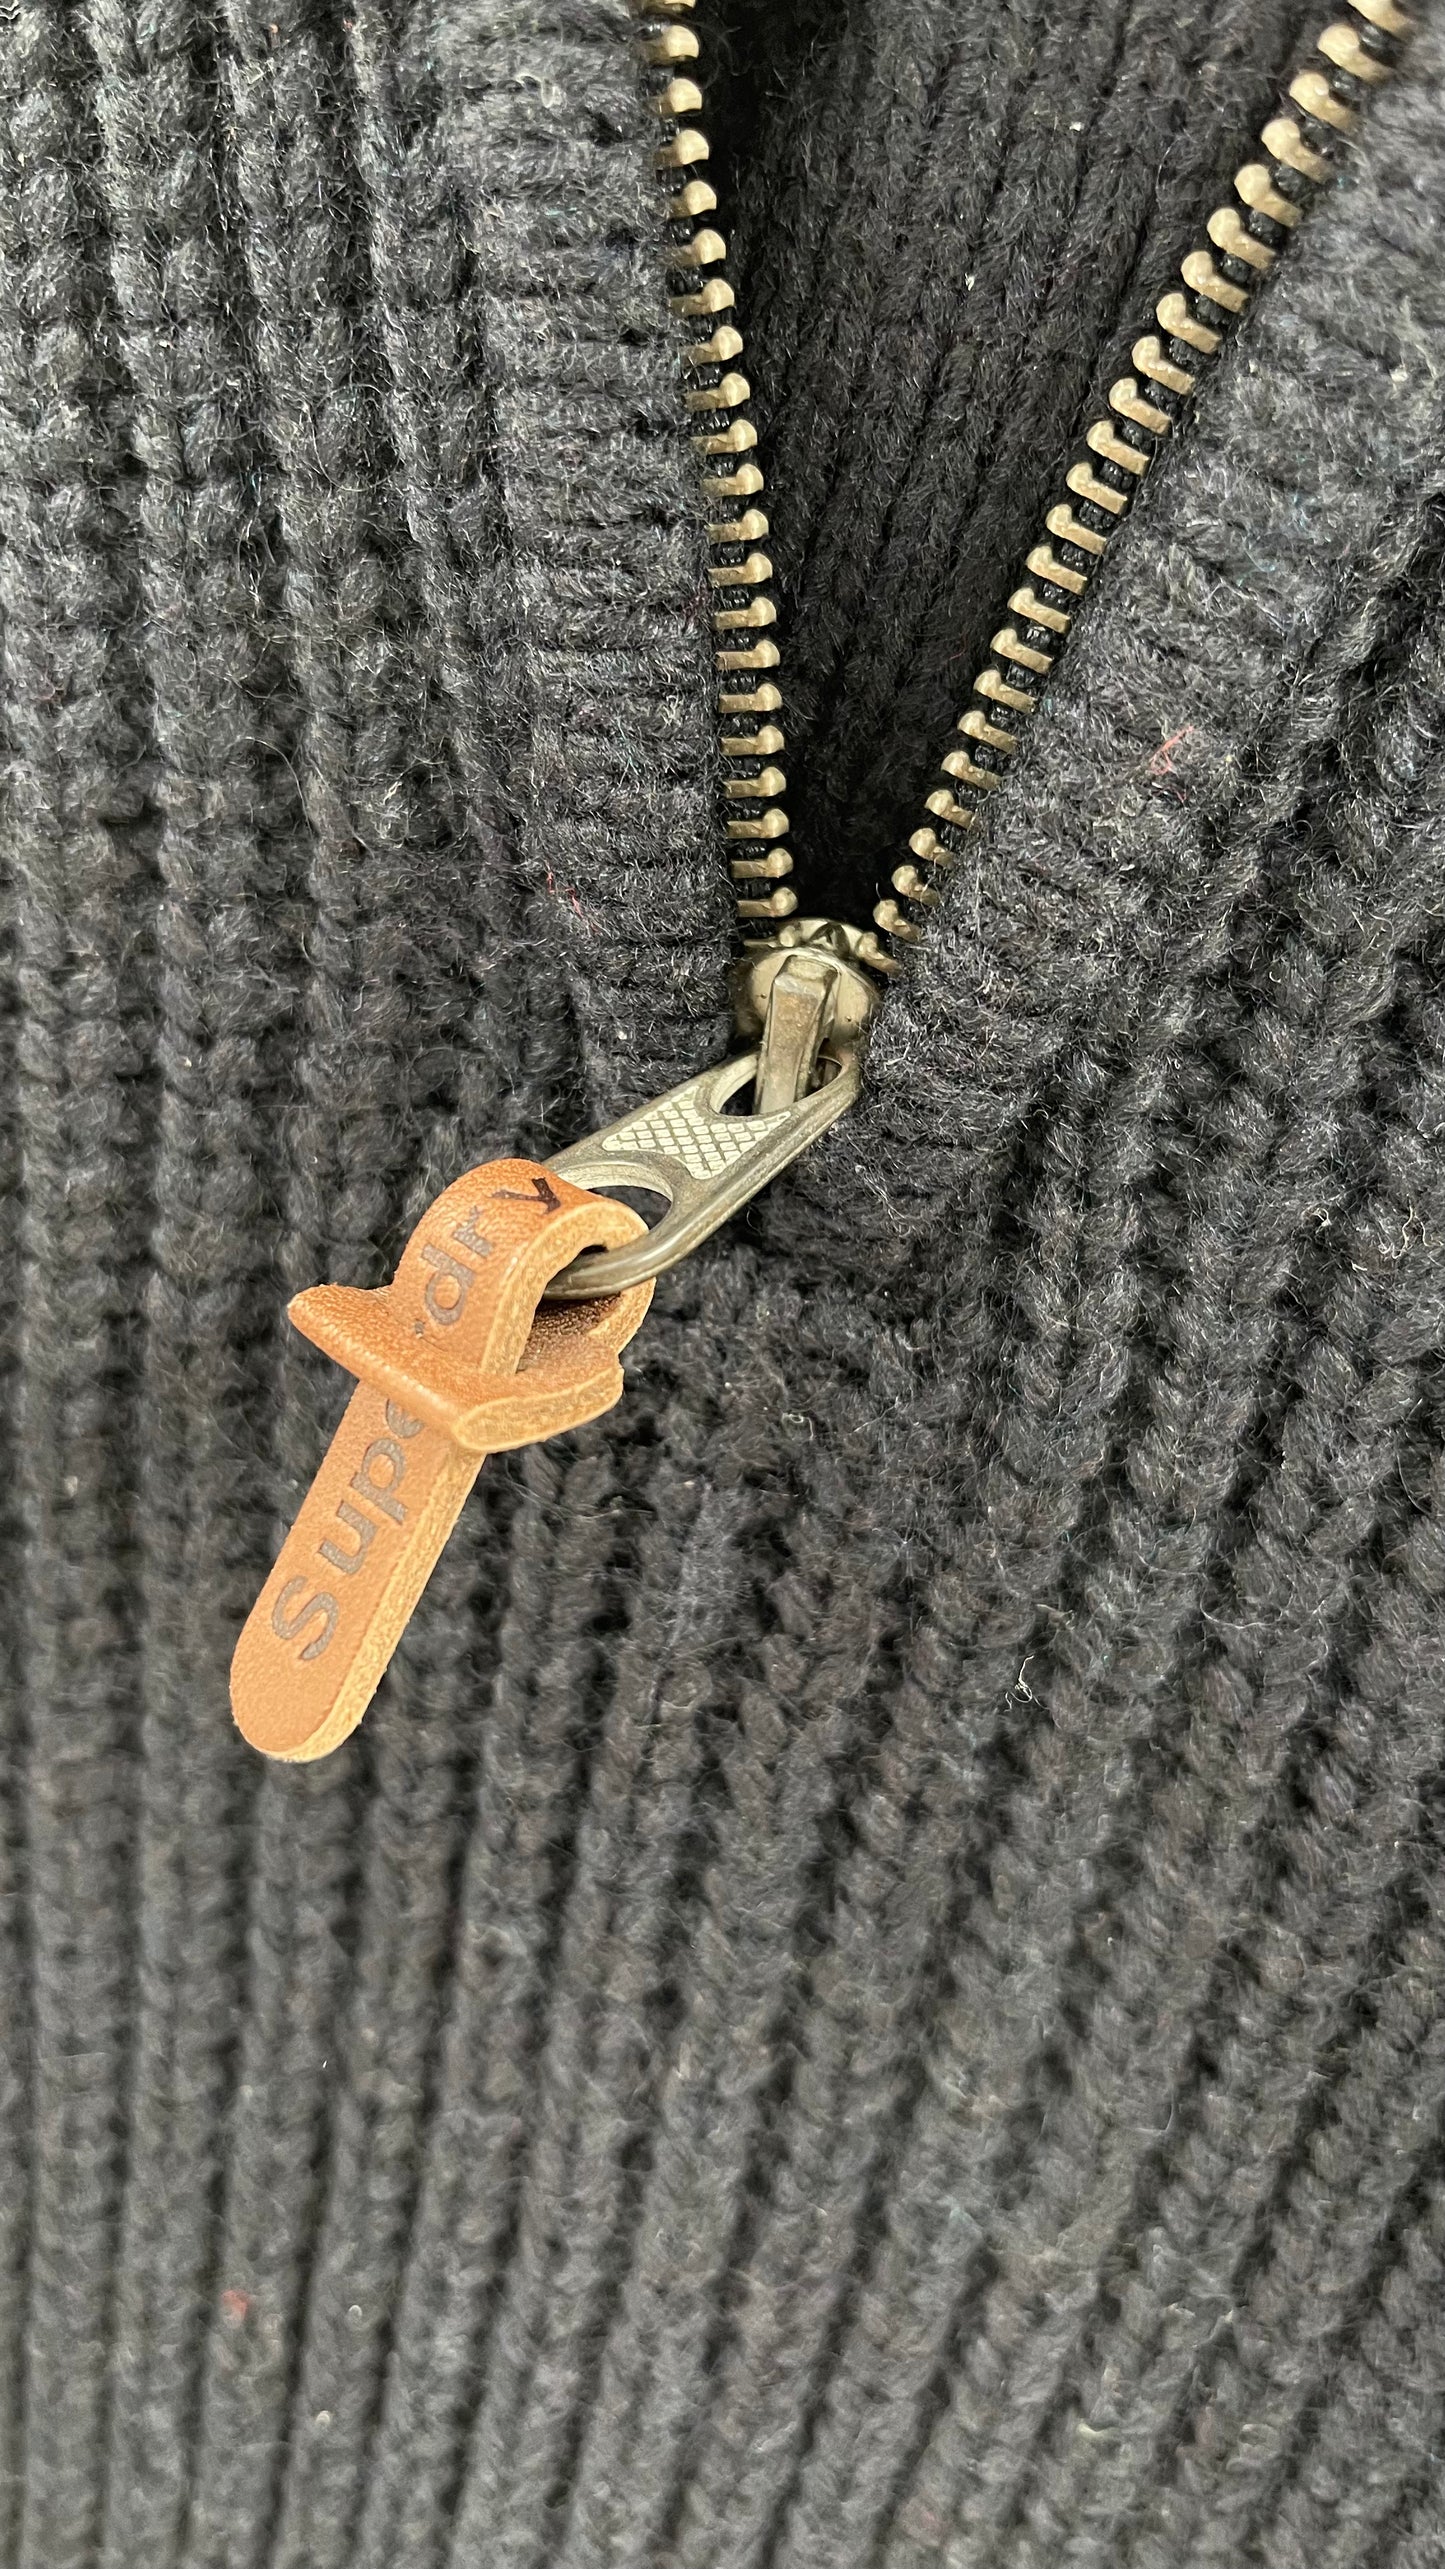 Superdry Navy Thick Knit Ski Dog Quarter Zip Henley (XL)